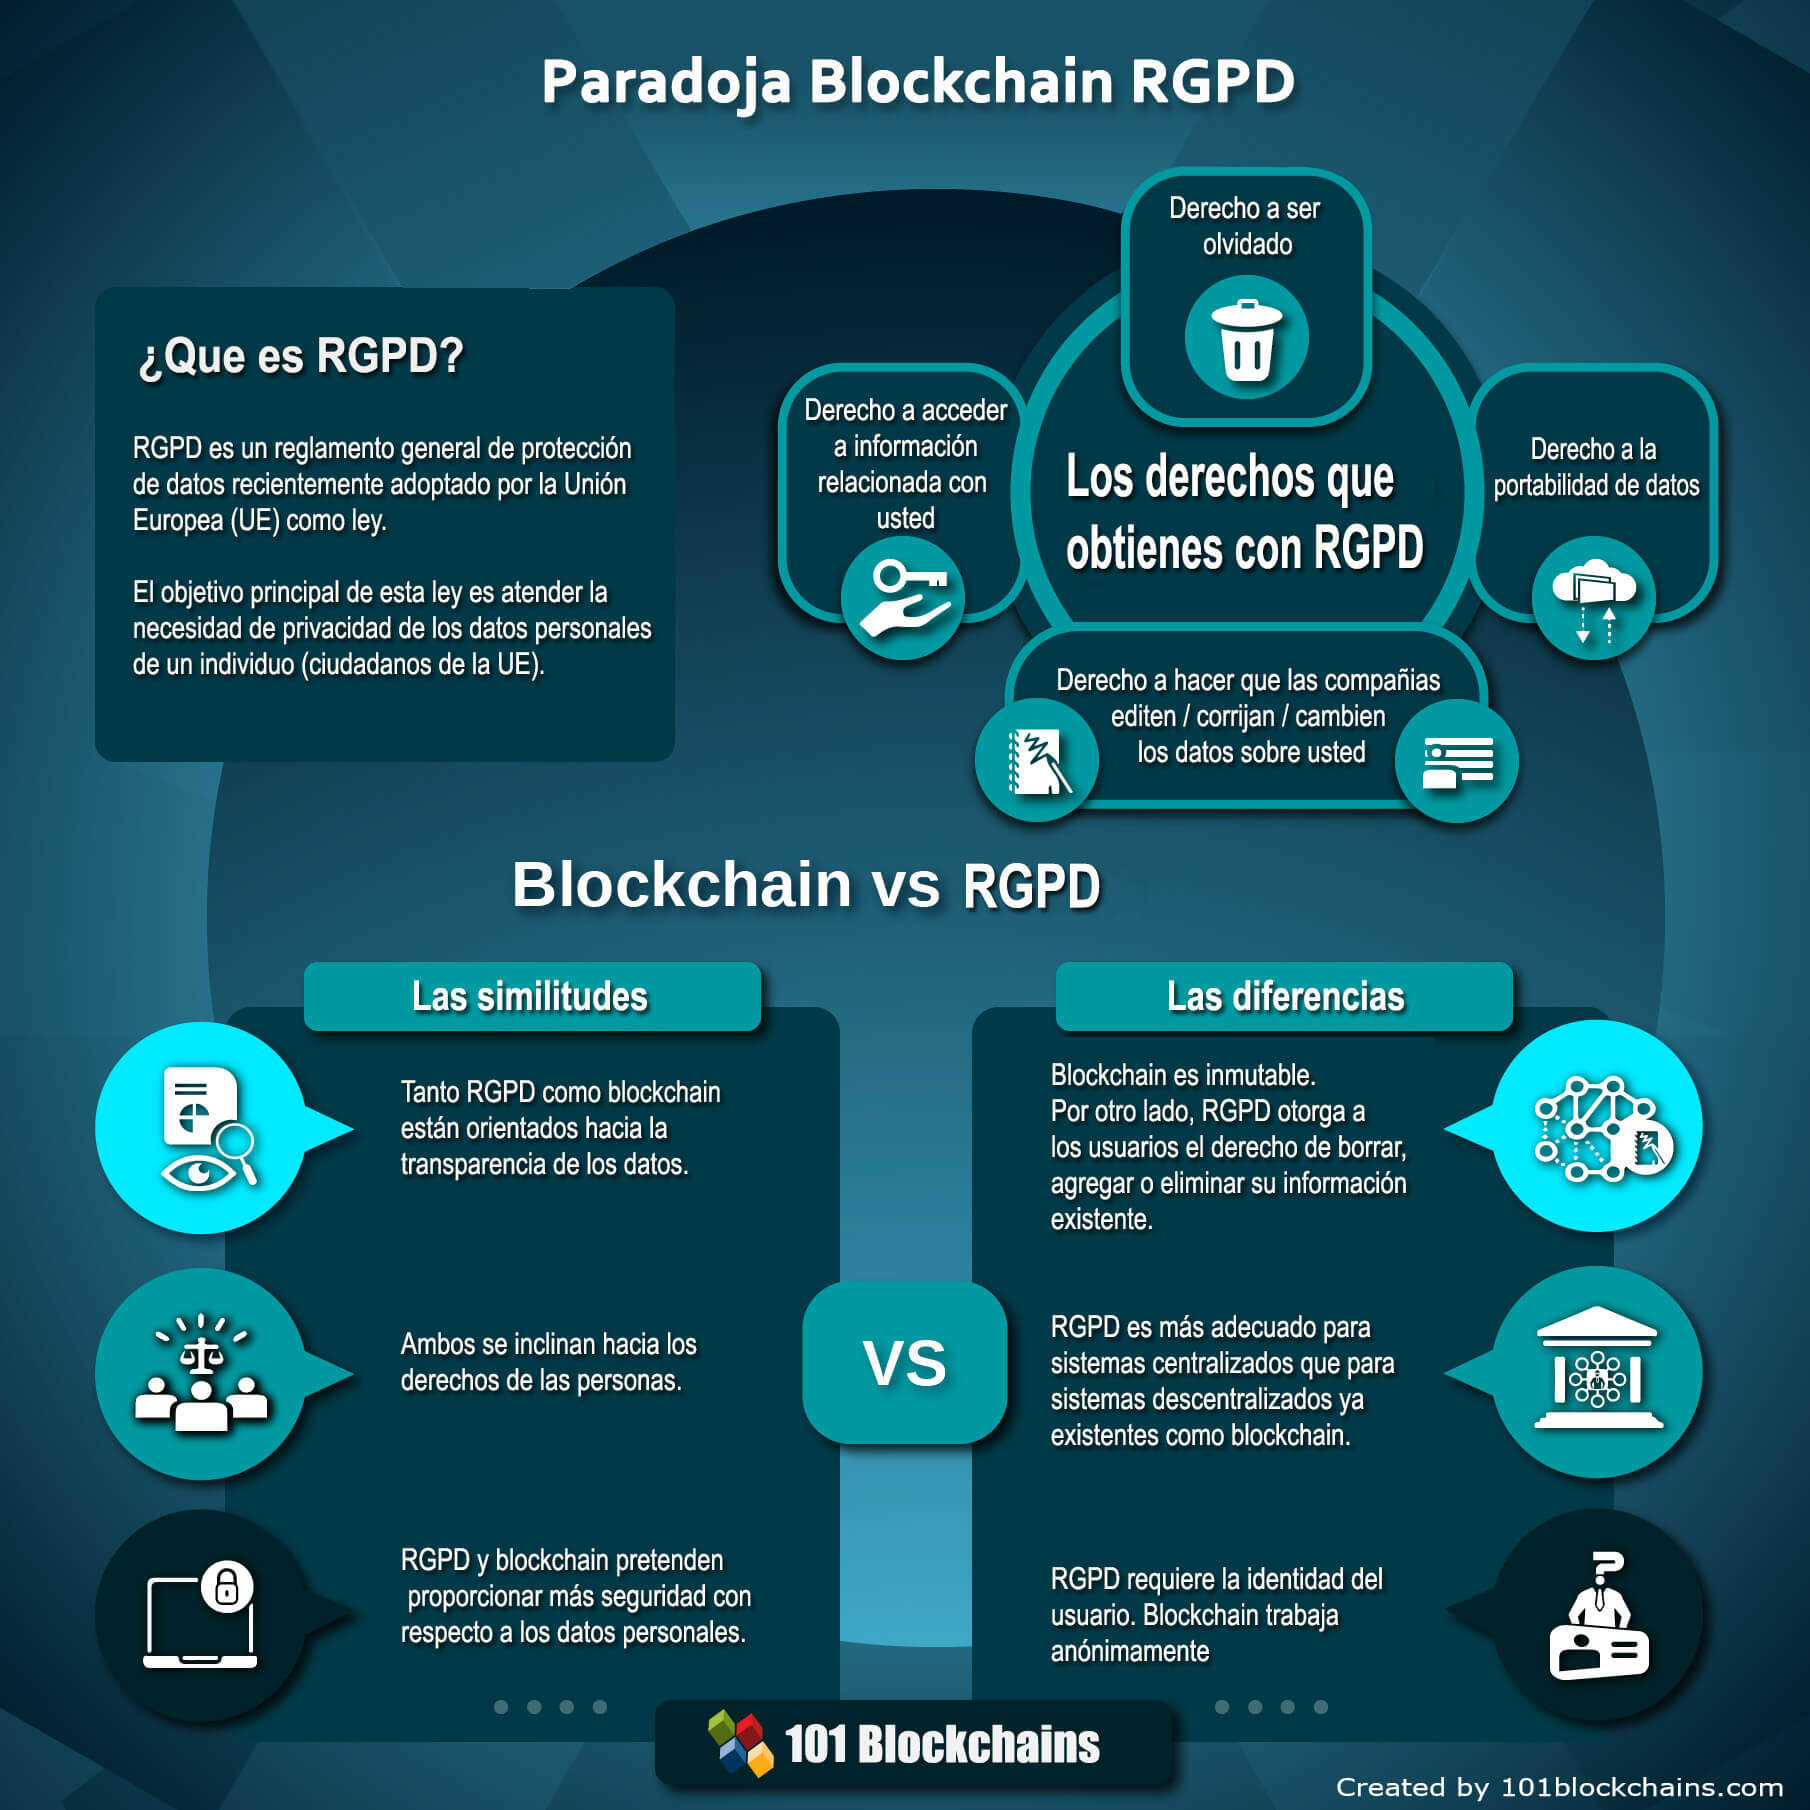 Paradoja Blockchain RGPD